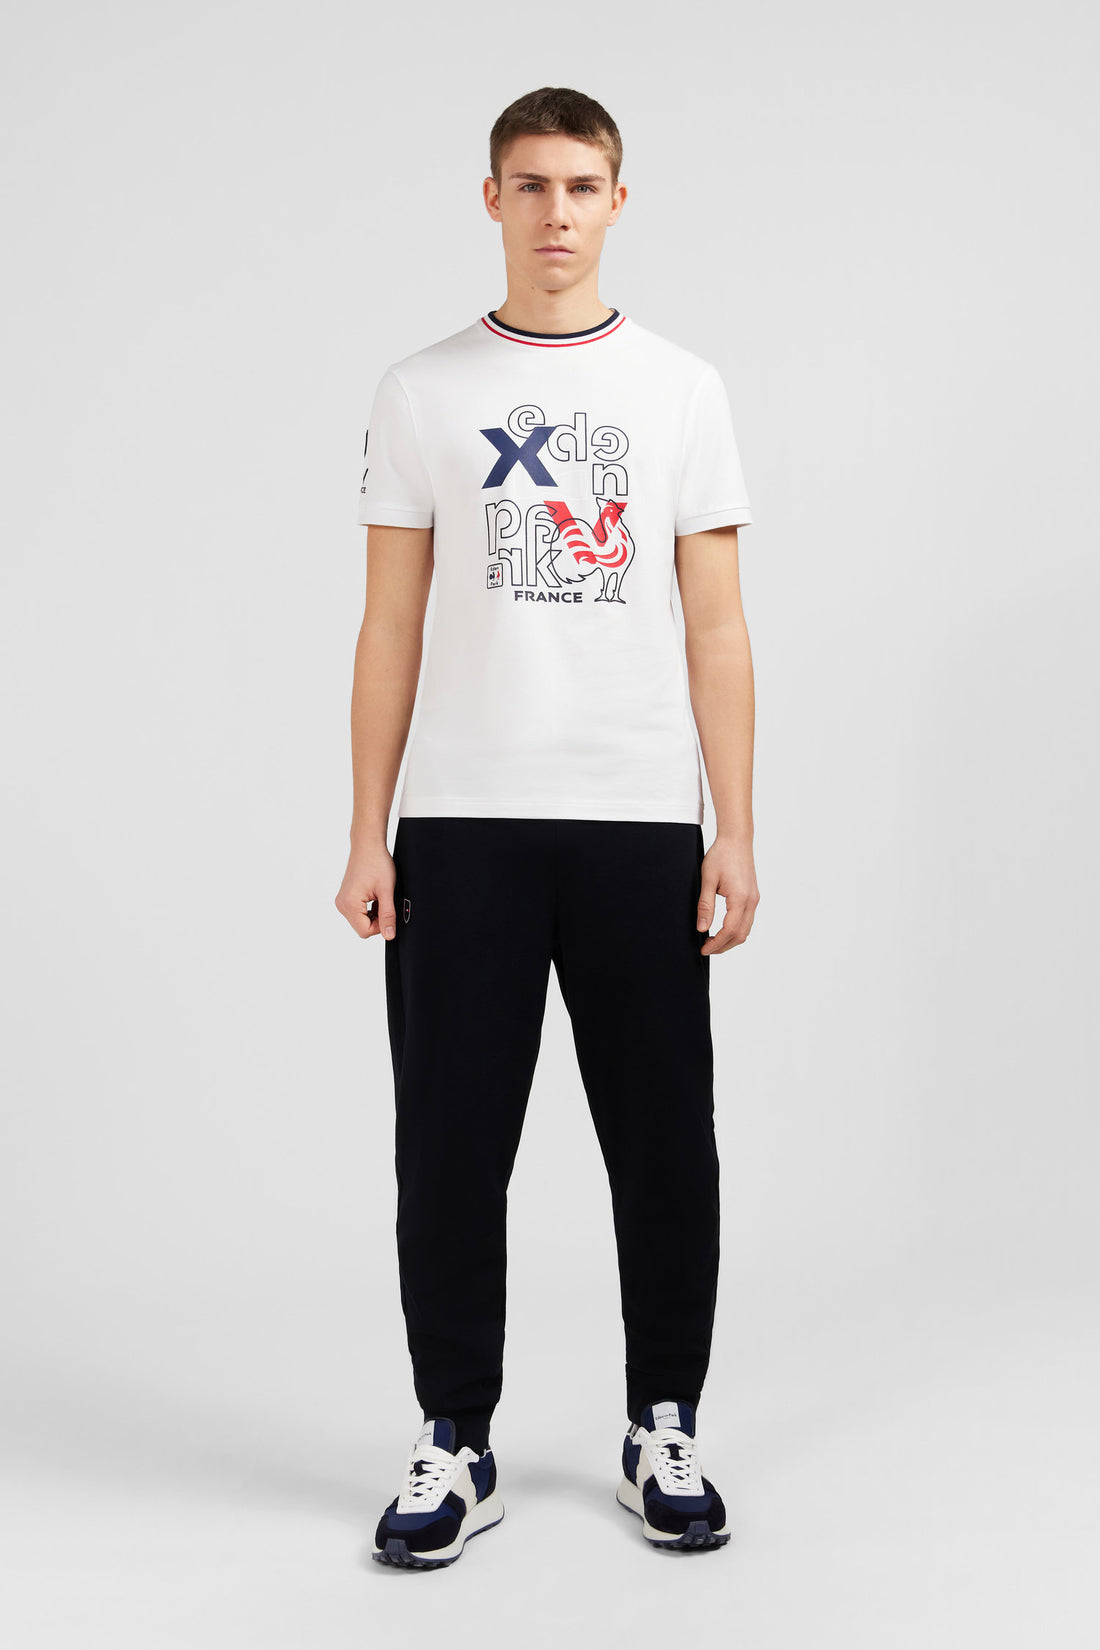 XV De France White Printed Short-Sleeved T-Shirt_E24MAITC0057_BC_01